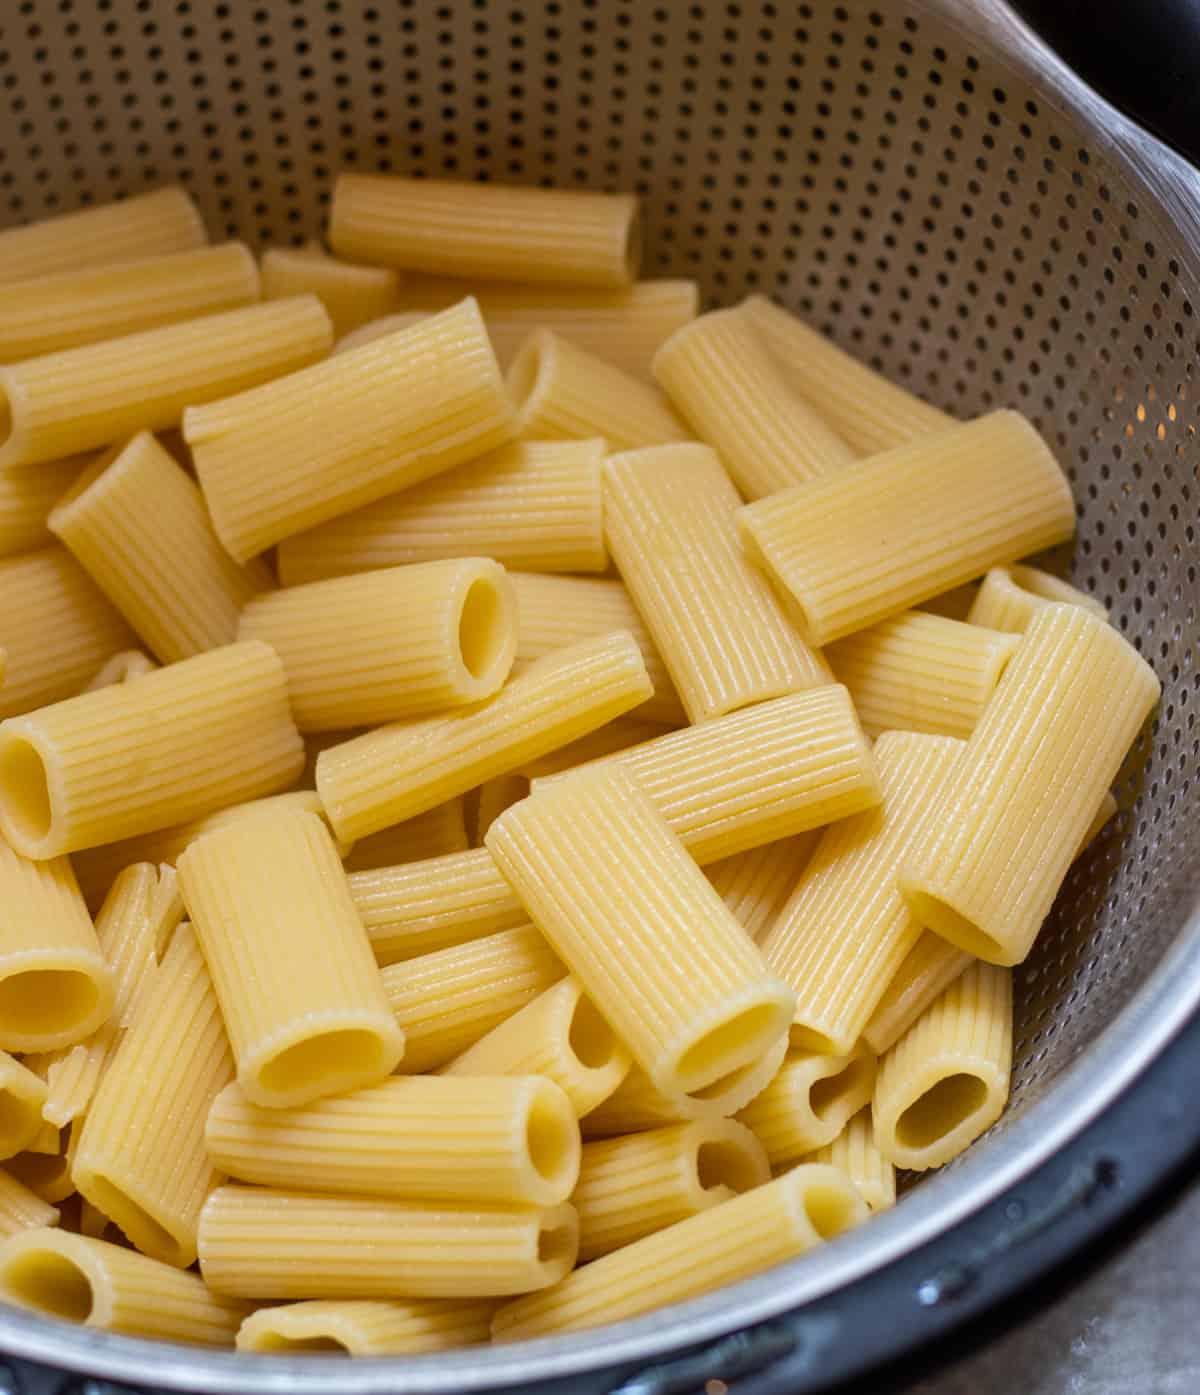 Boiled rigatoni noodles in a colander.